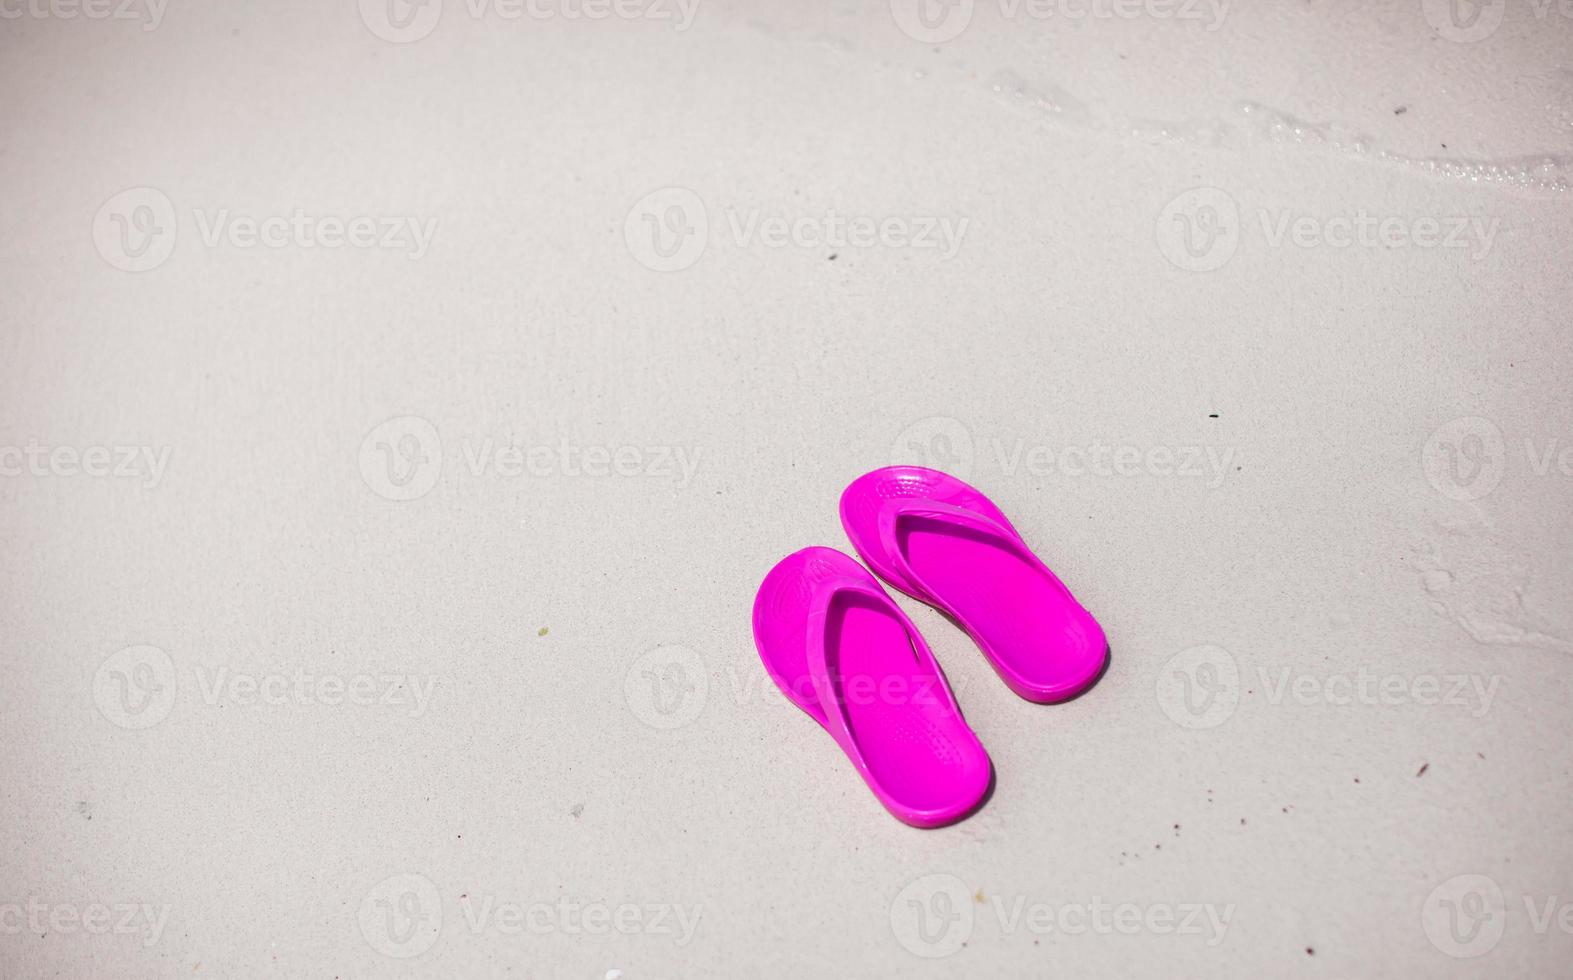 par de chinelos coloridos na praia do mar foto